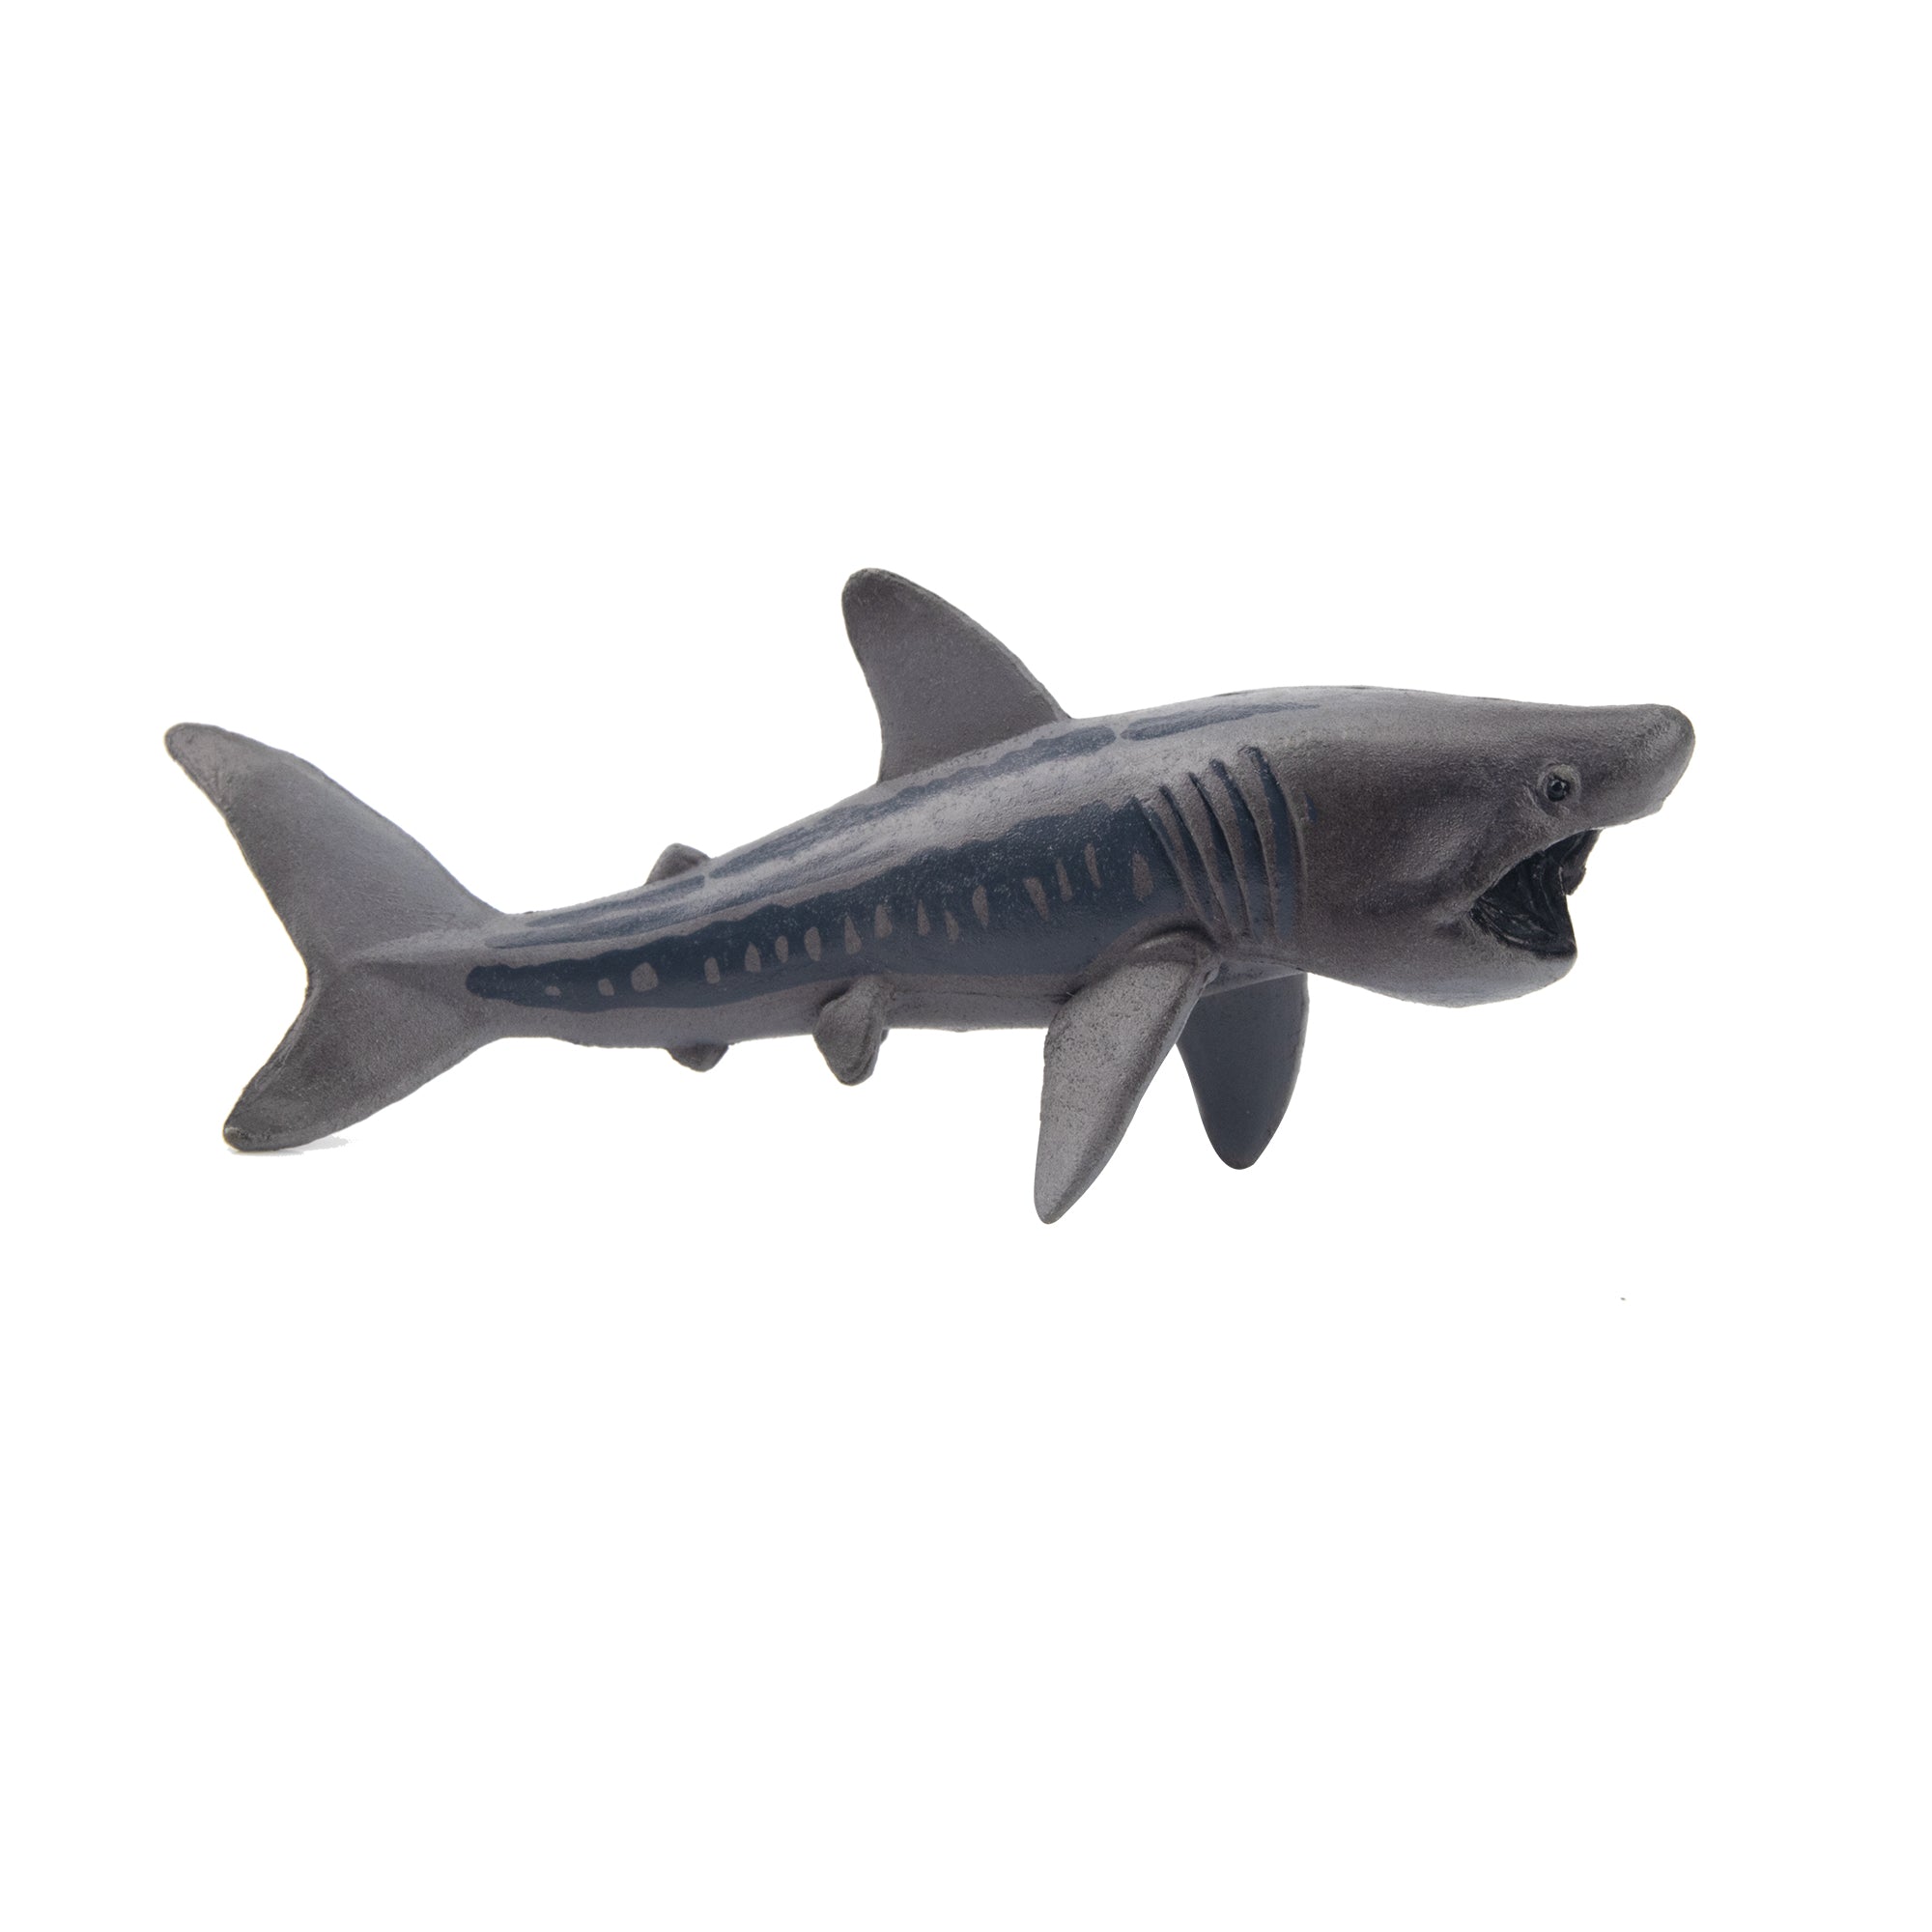 Toymany Basking Shark Figurine Toy